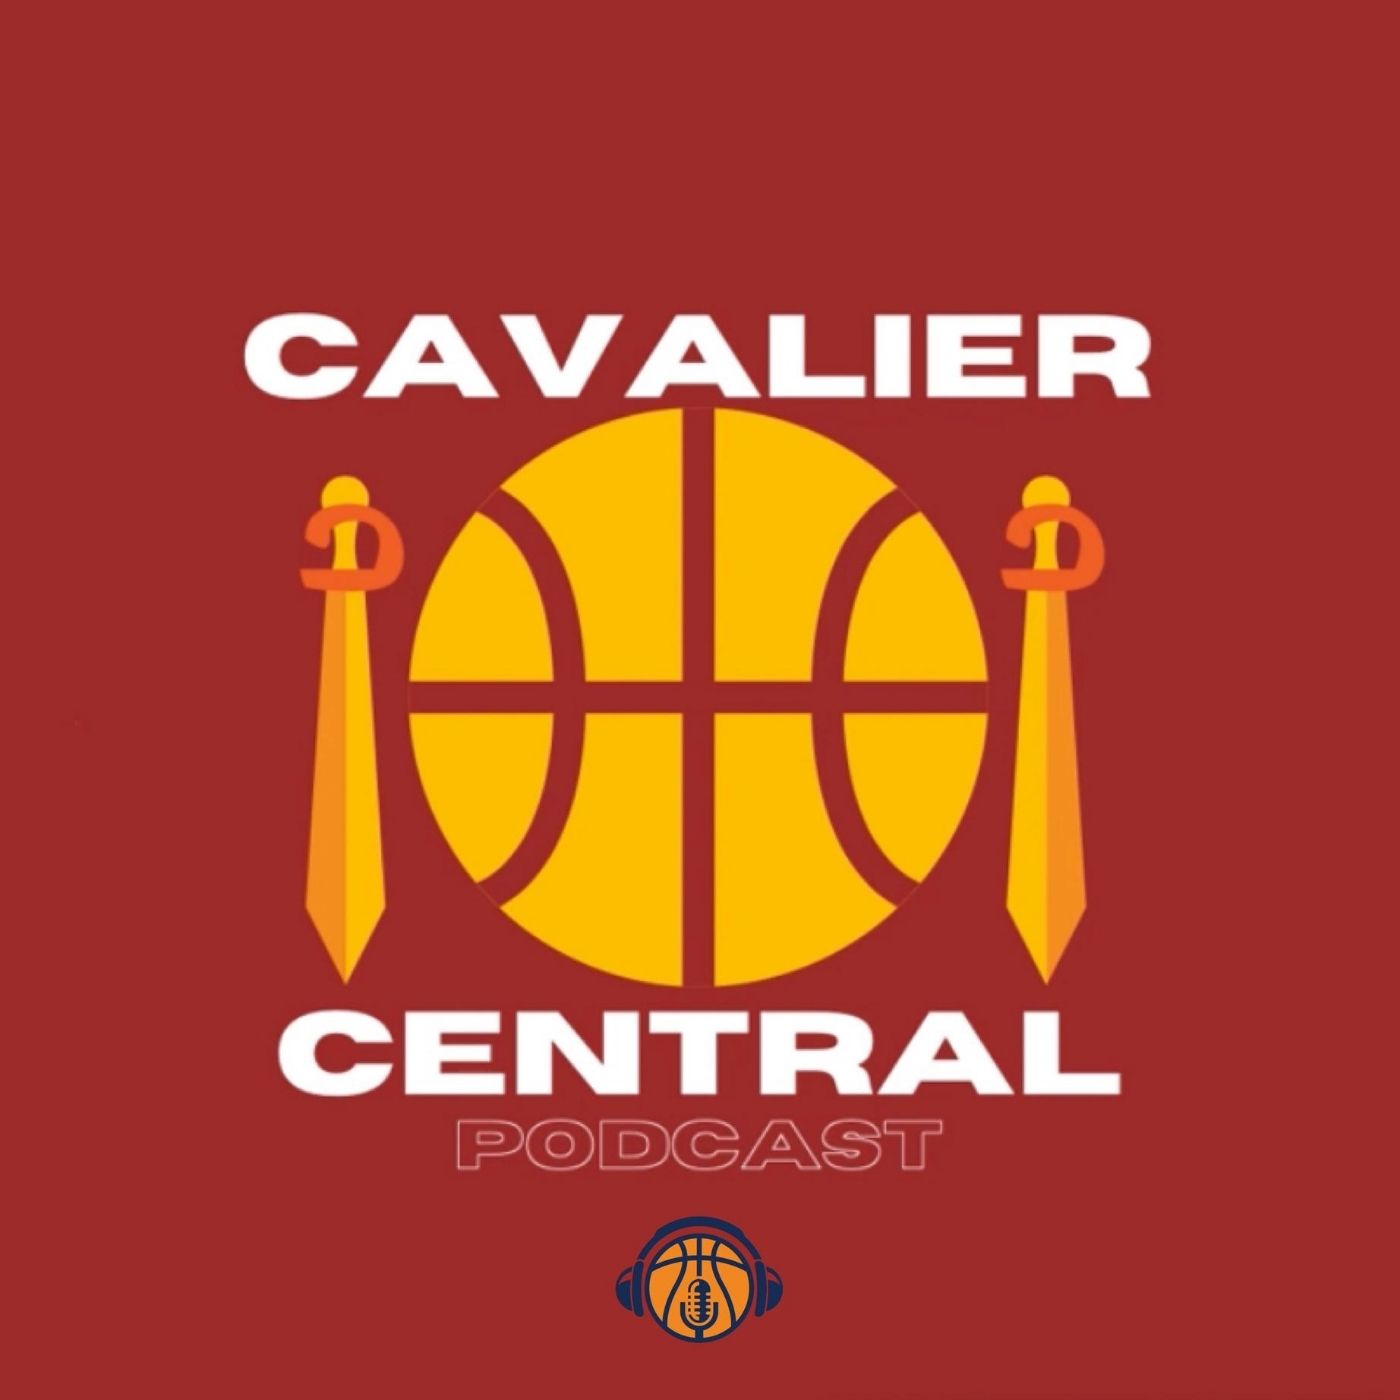 Cavalier Central podcast 